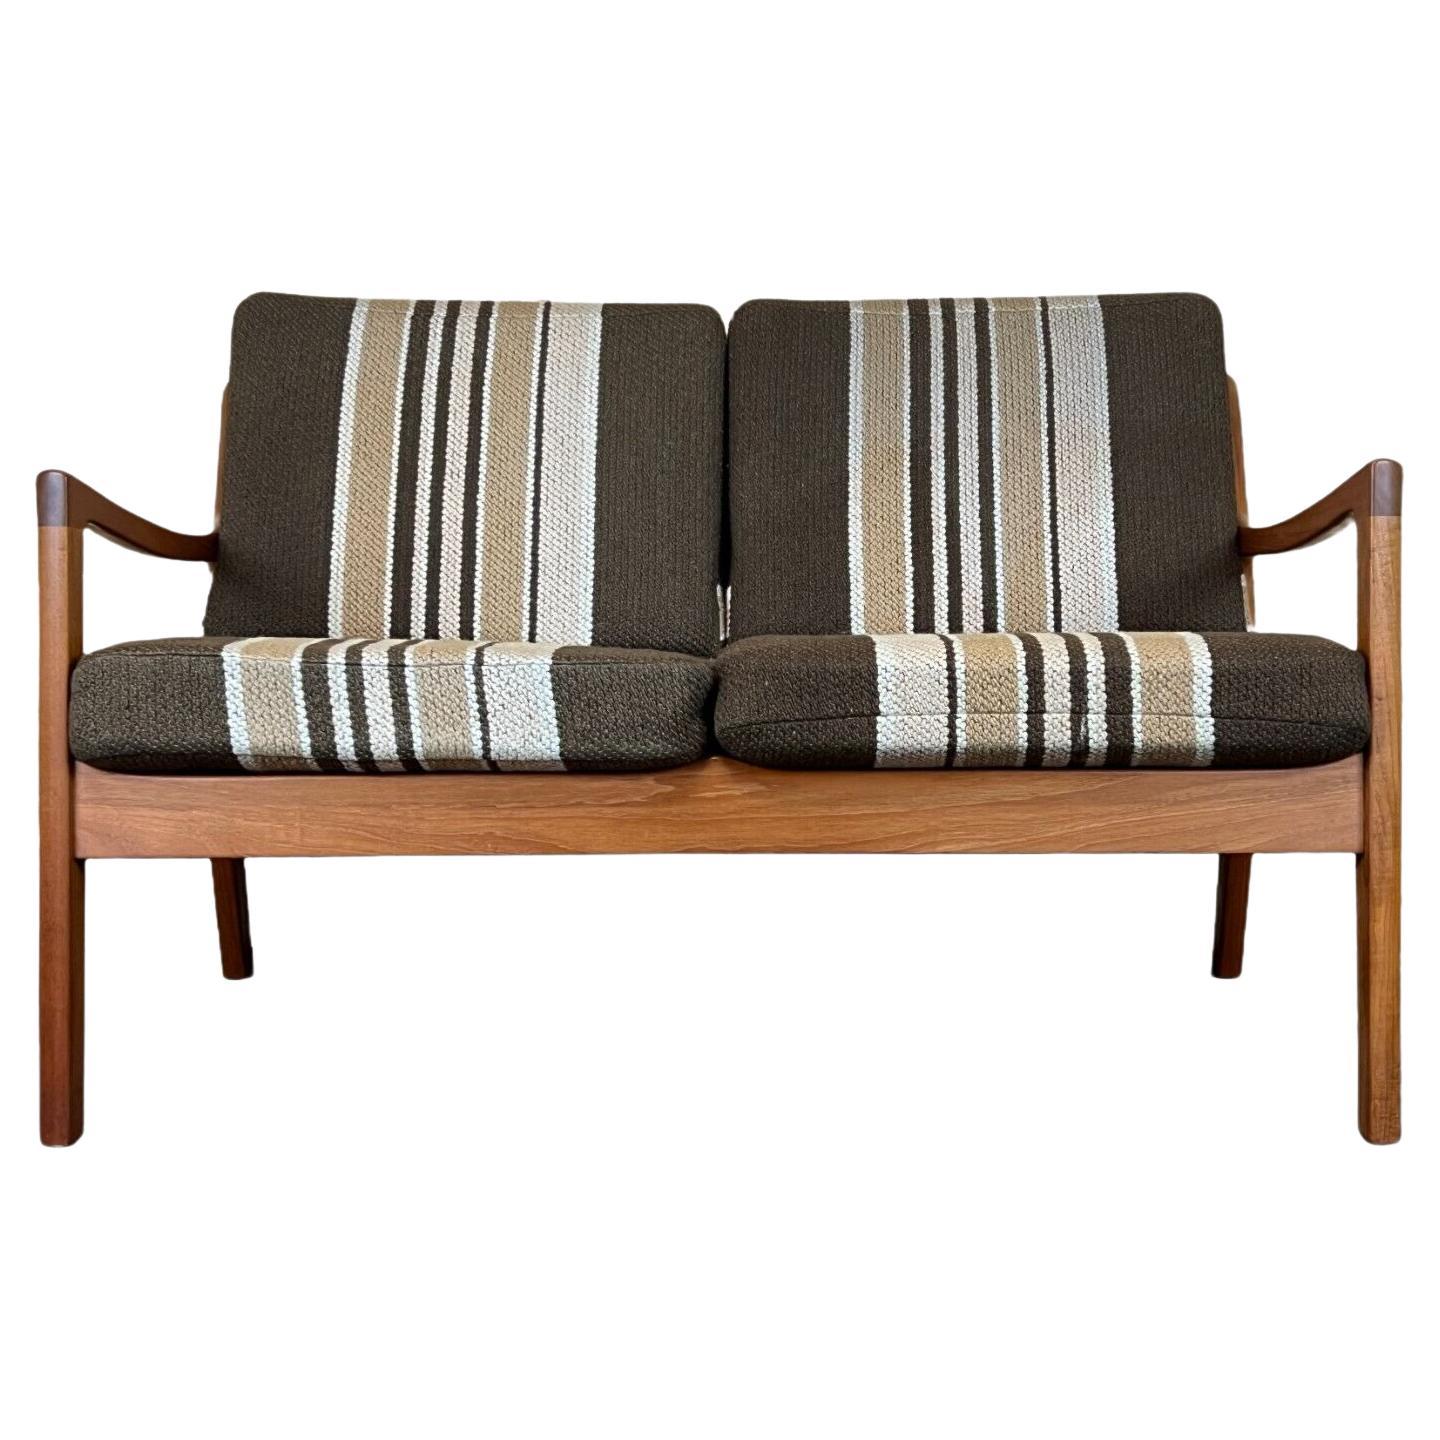 60s 70s Teak 2 Seater Sofa Couch Ole Wanscher Cado France & Son Danish Design For Sale